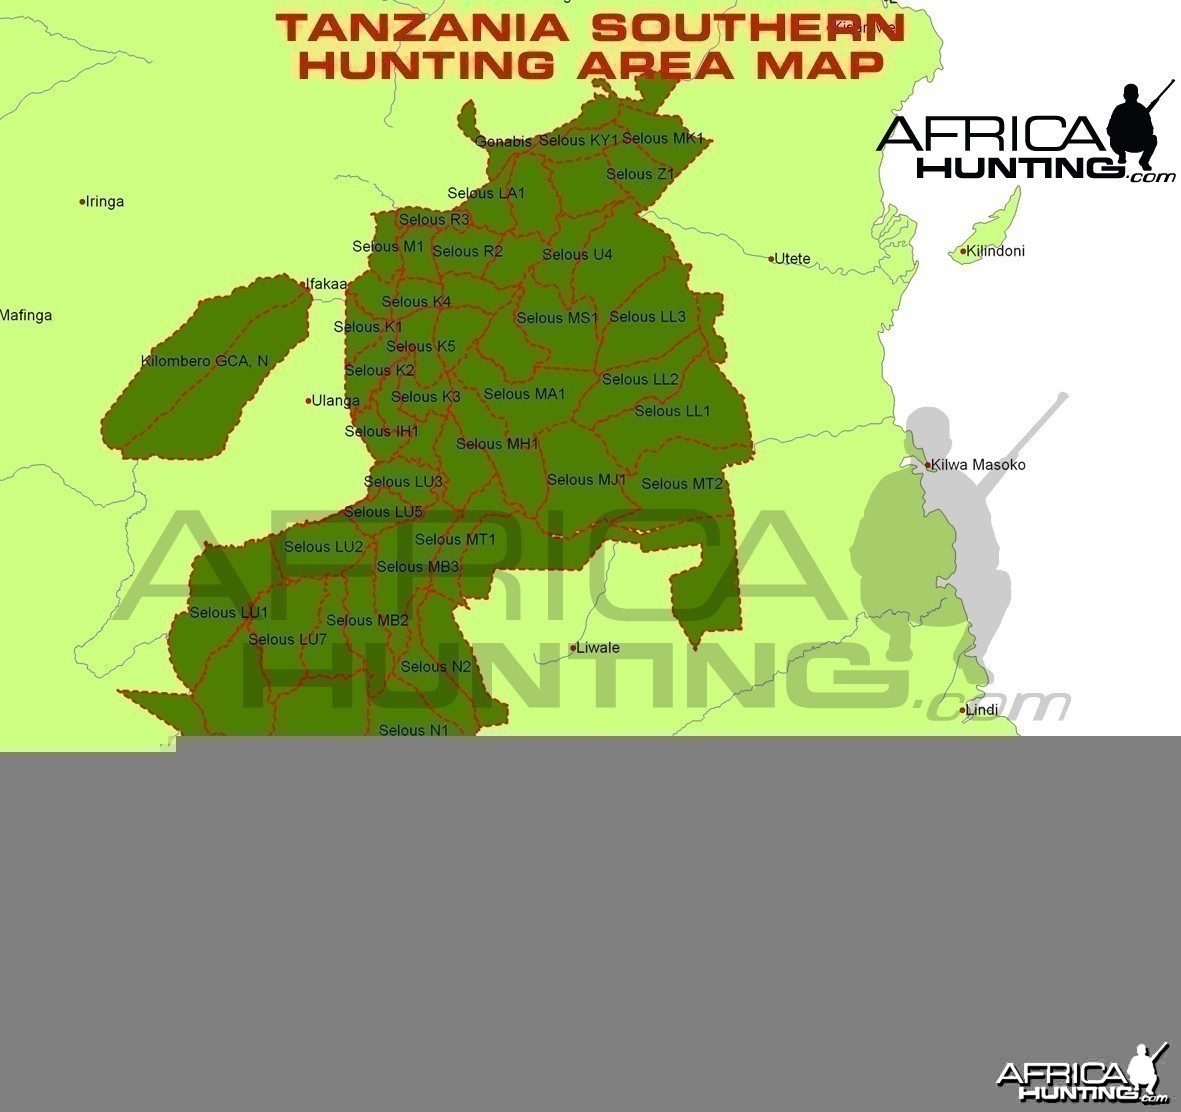 Hunting Areas of Southern Tanzania